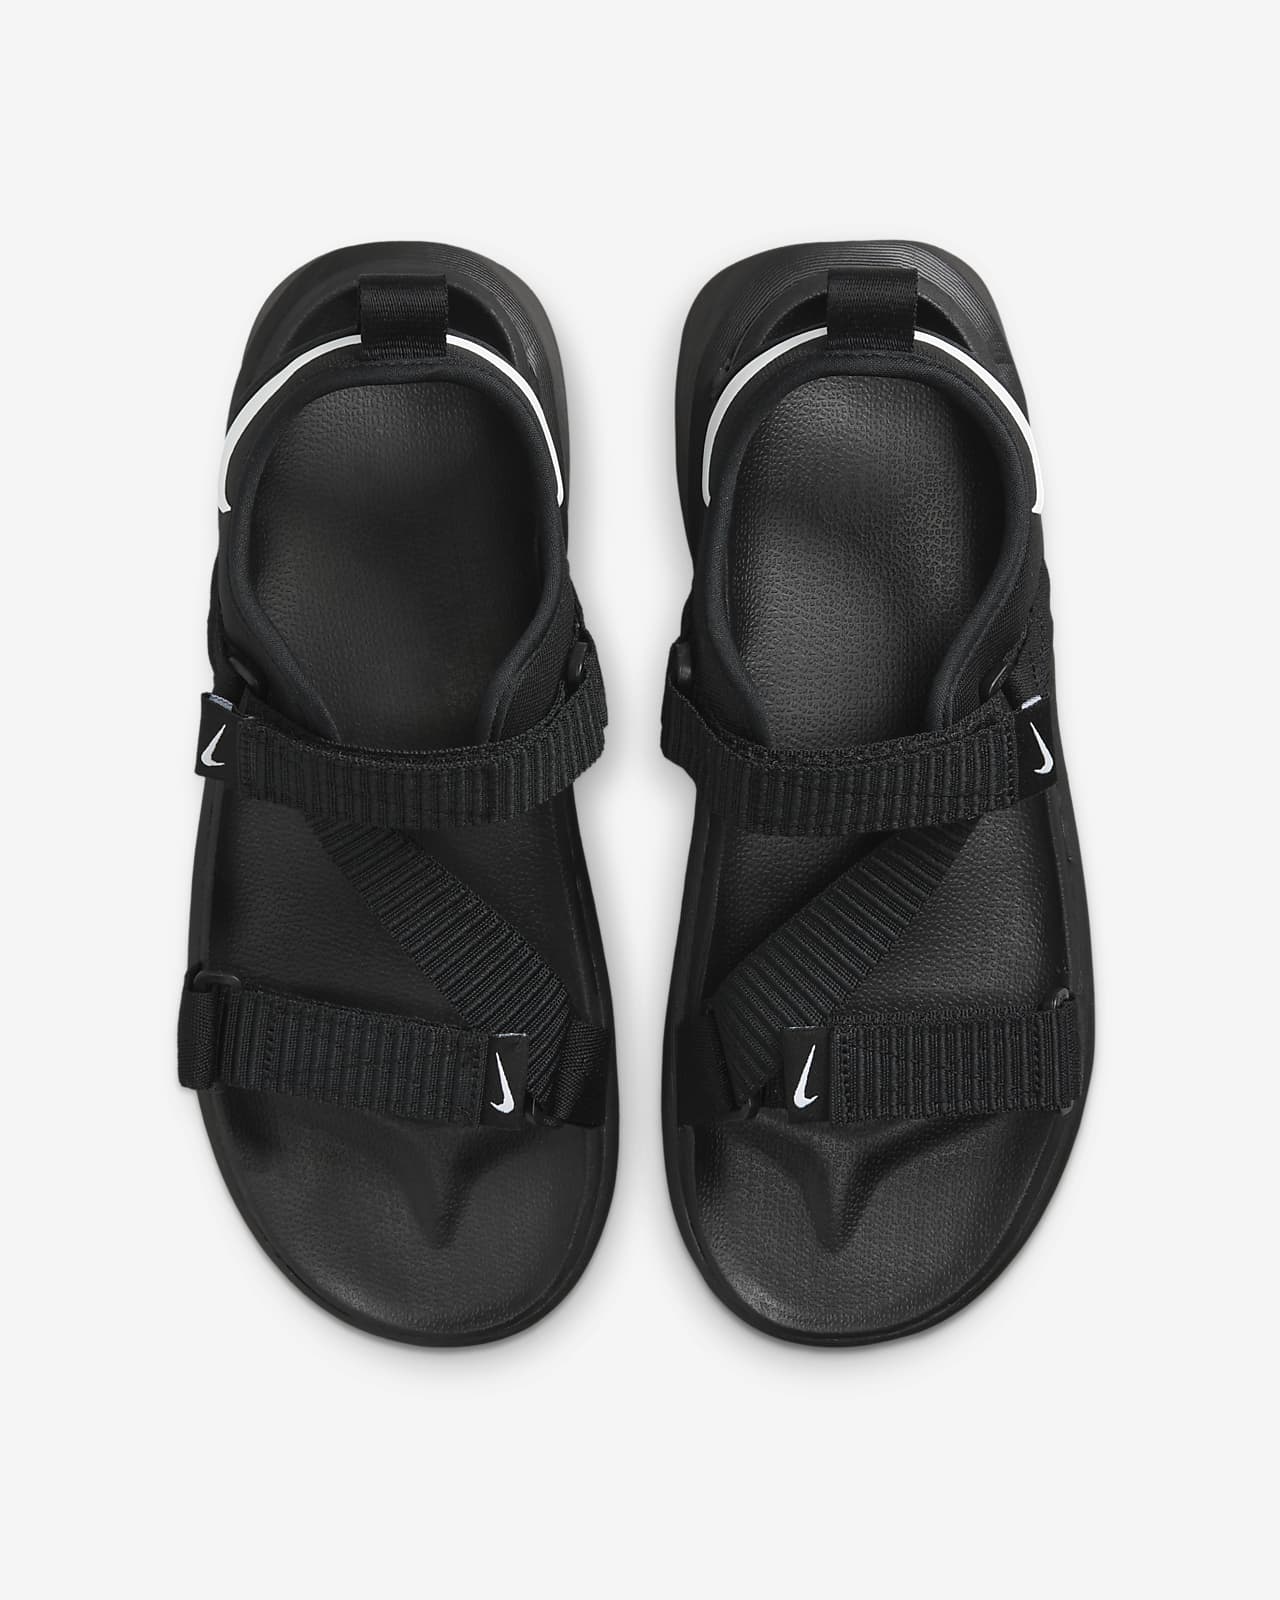 Nike Mens Sandals - Sandal Design